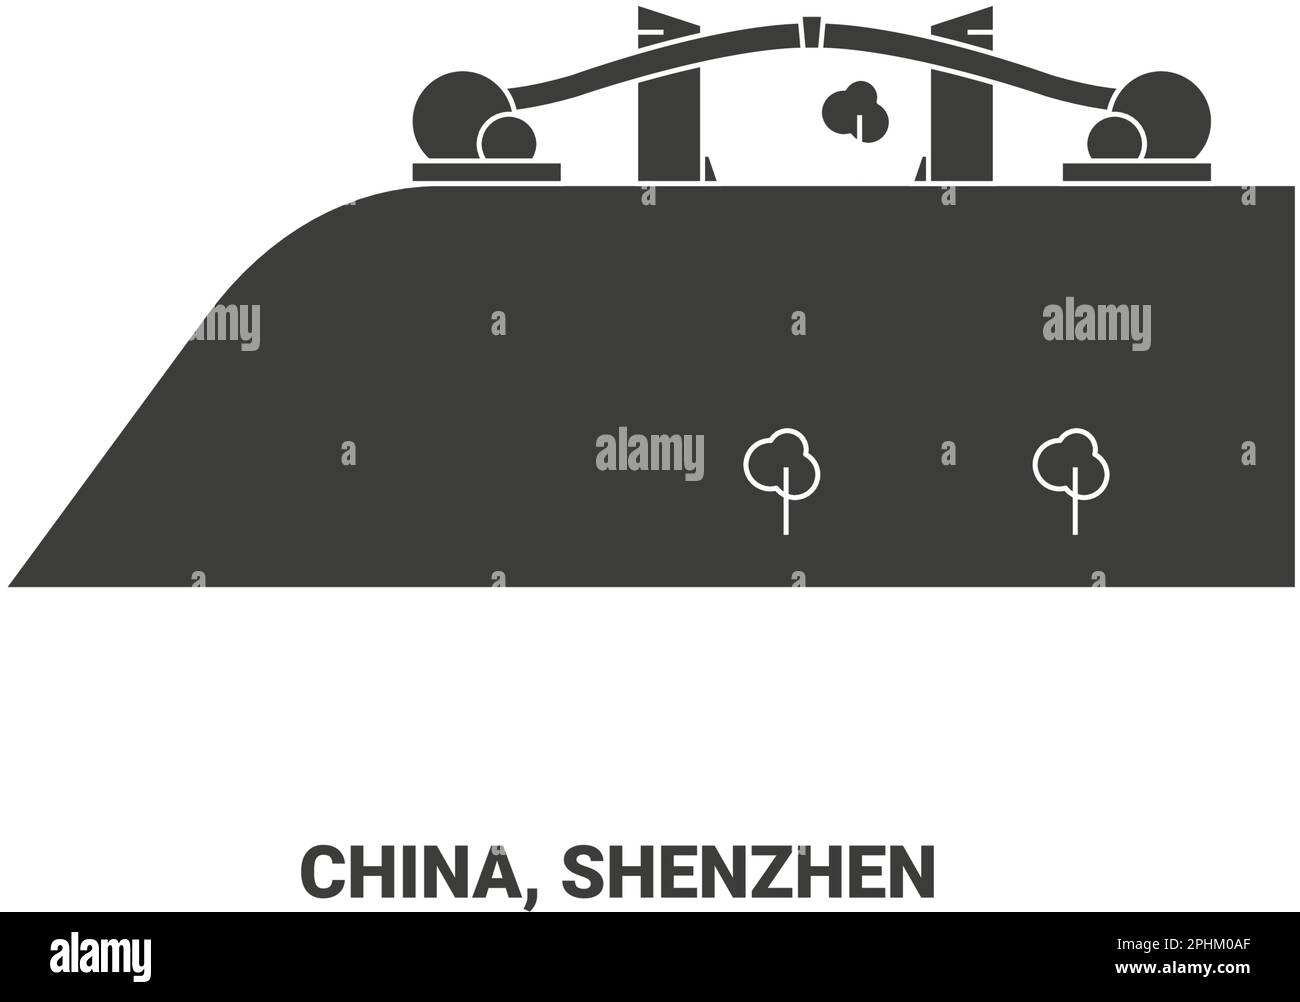 China, Shenzhen travel landmark vector illustration Stock Vector